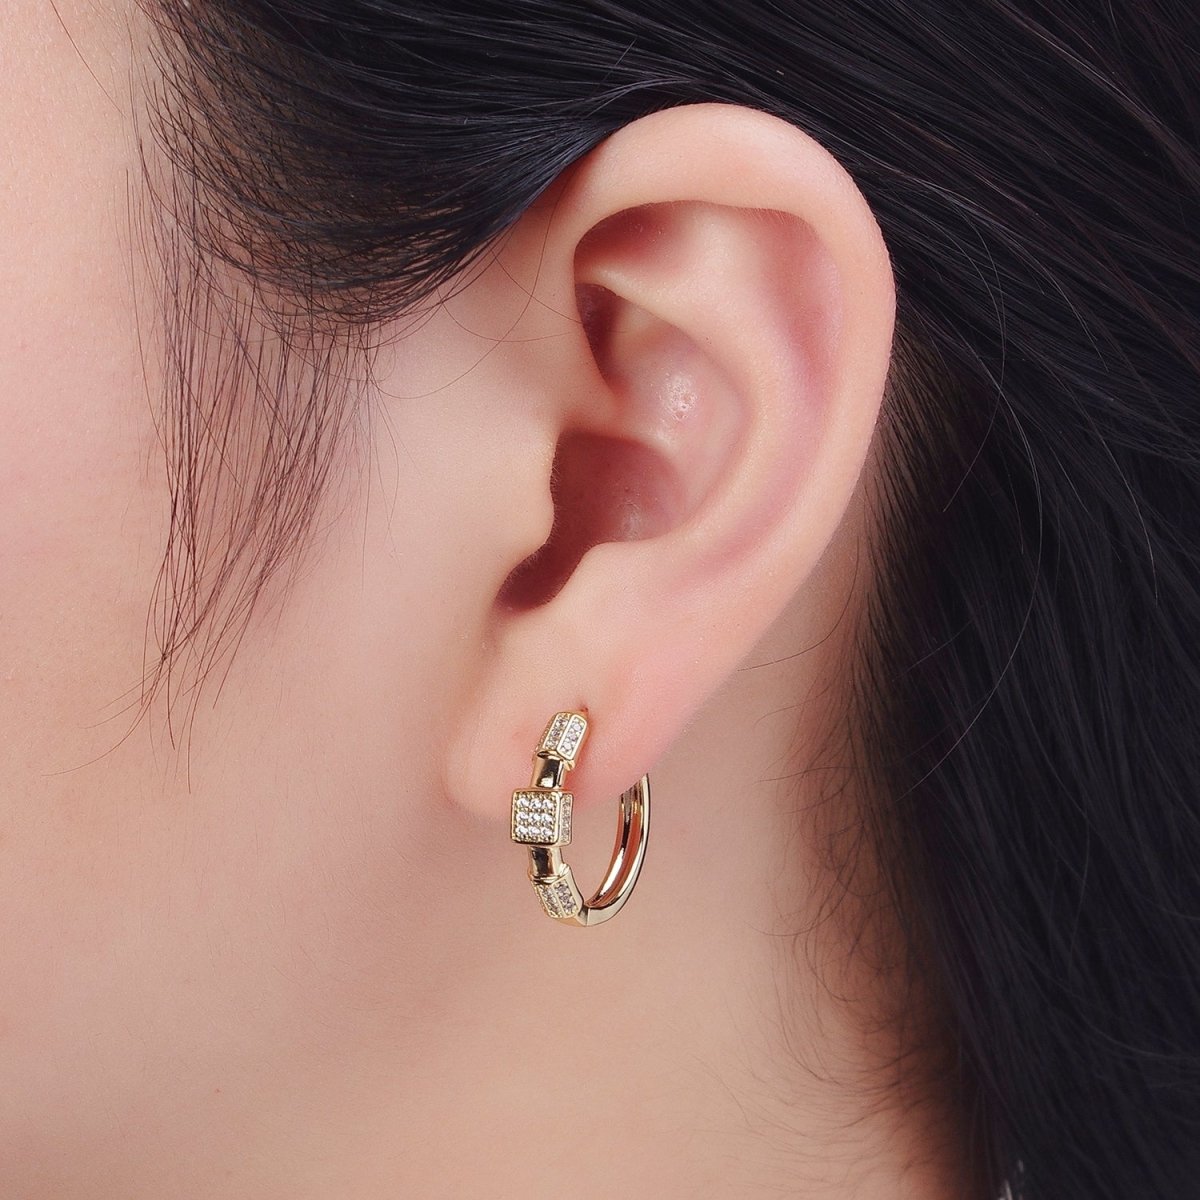 Gold Modern Hoop Earring Everyday Hoops Geometric Jewelry Medium Size Textured Hoops, Round Earrings P-253 - DLUXCA